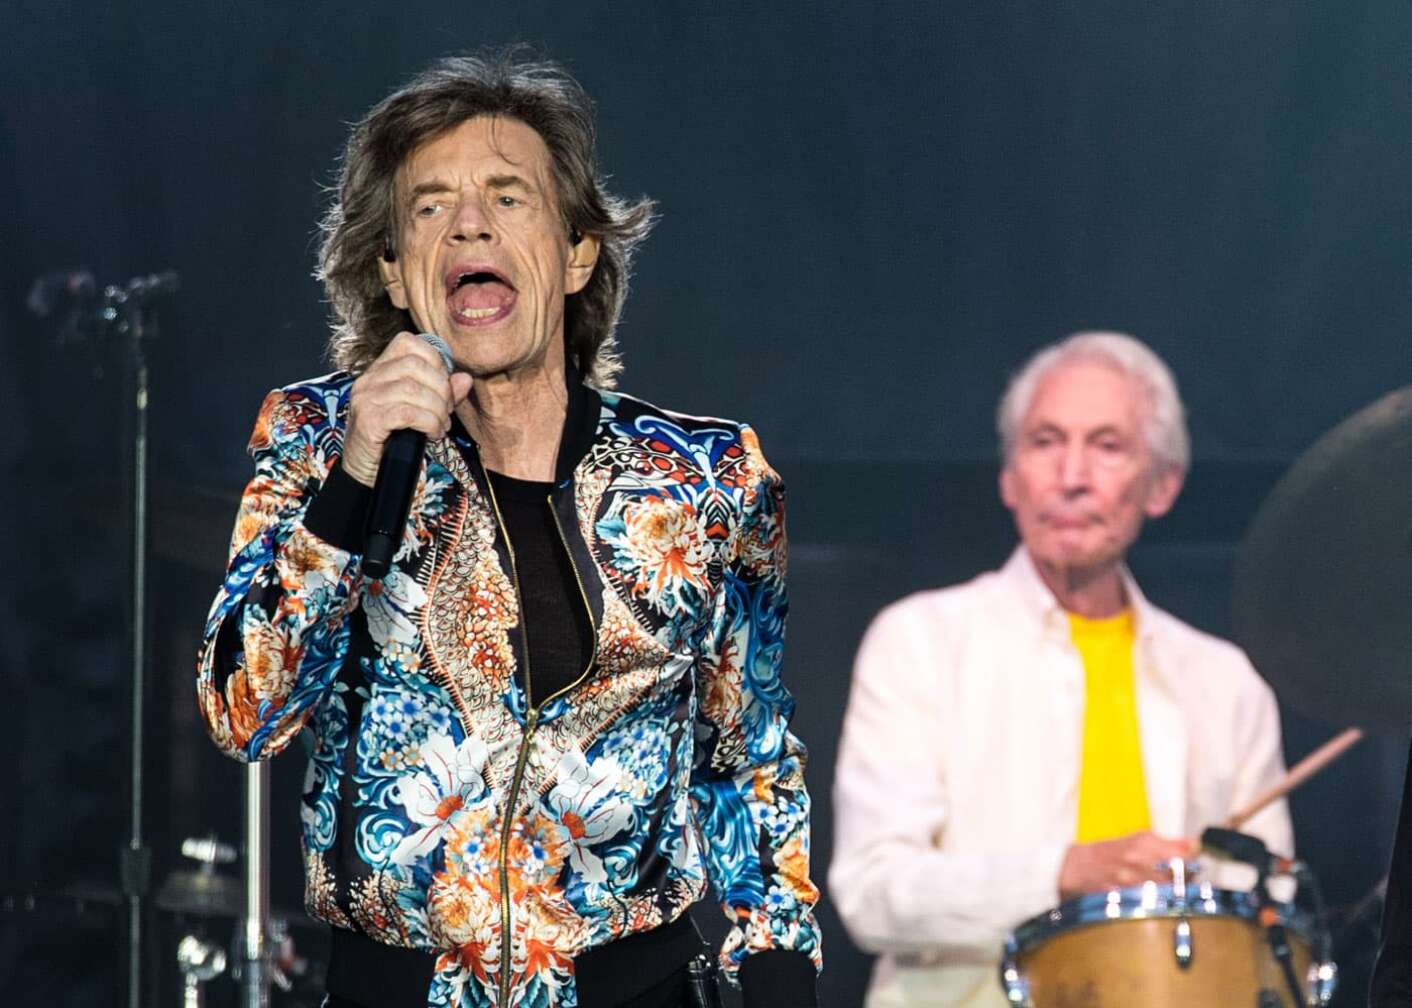 Charlie Watts vs. Mick Jagger